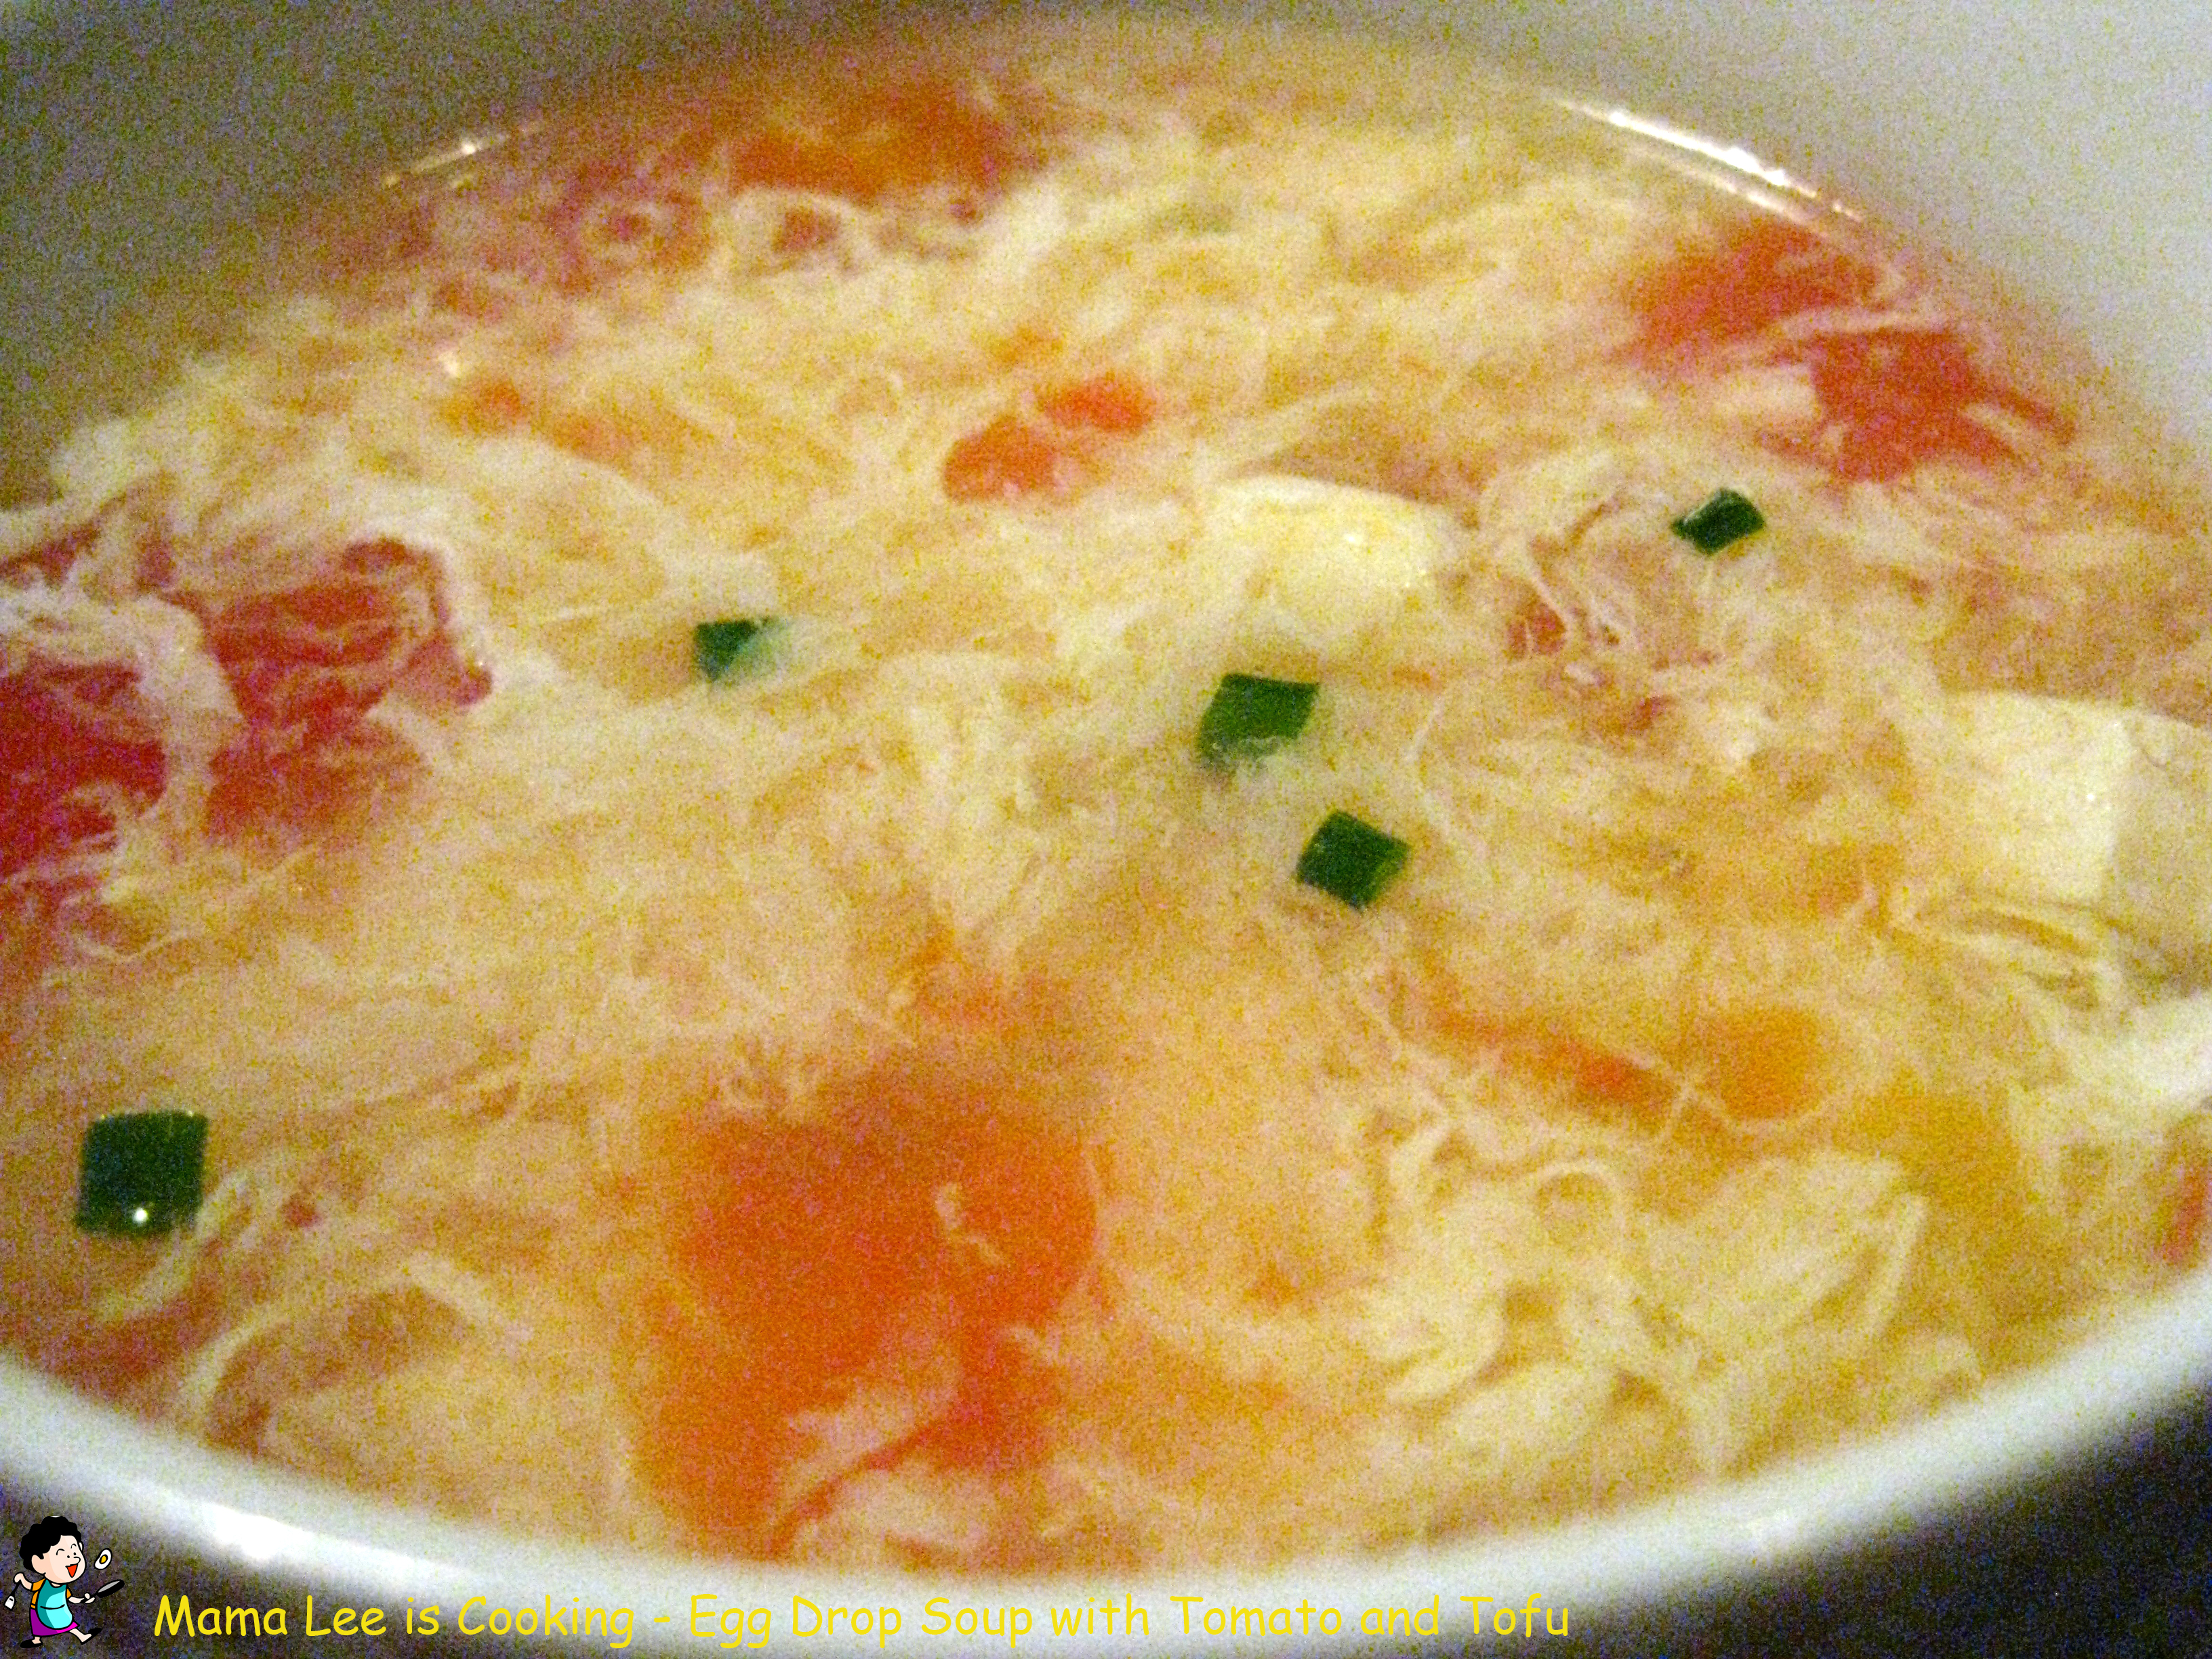 Egg Drop Soup with Tomato and Tofu